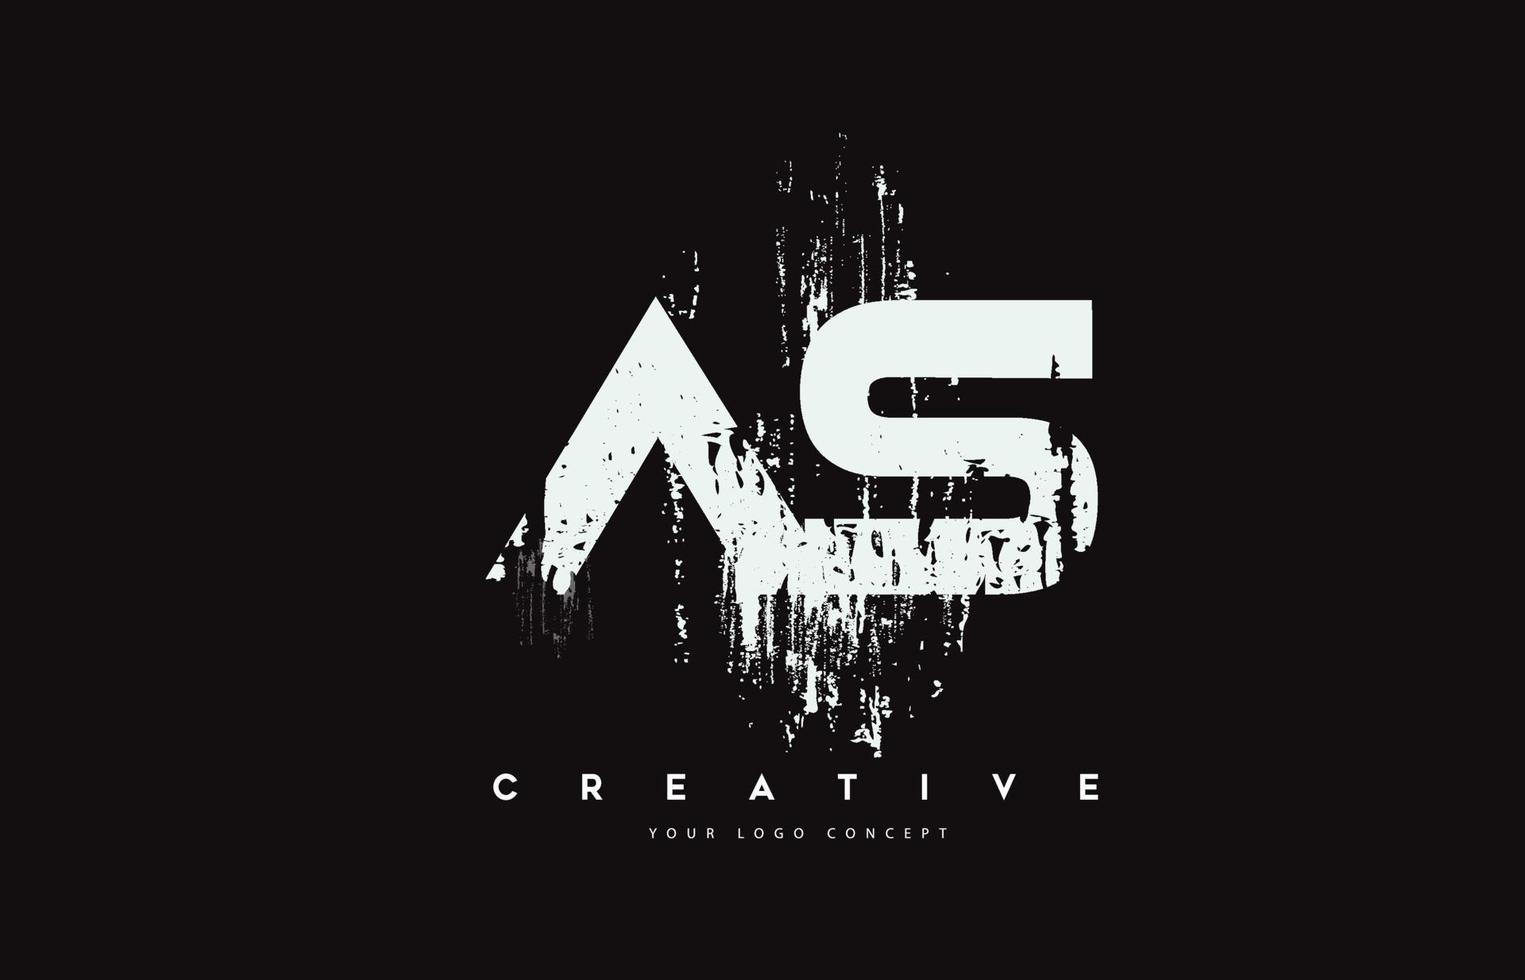 AS A S Grunge Brush Letter Logo Design in White Colors Vector Illustration.